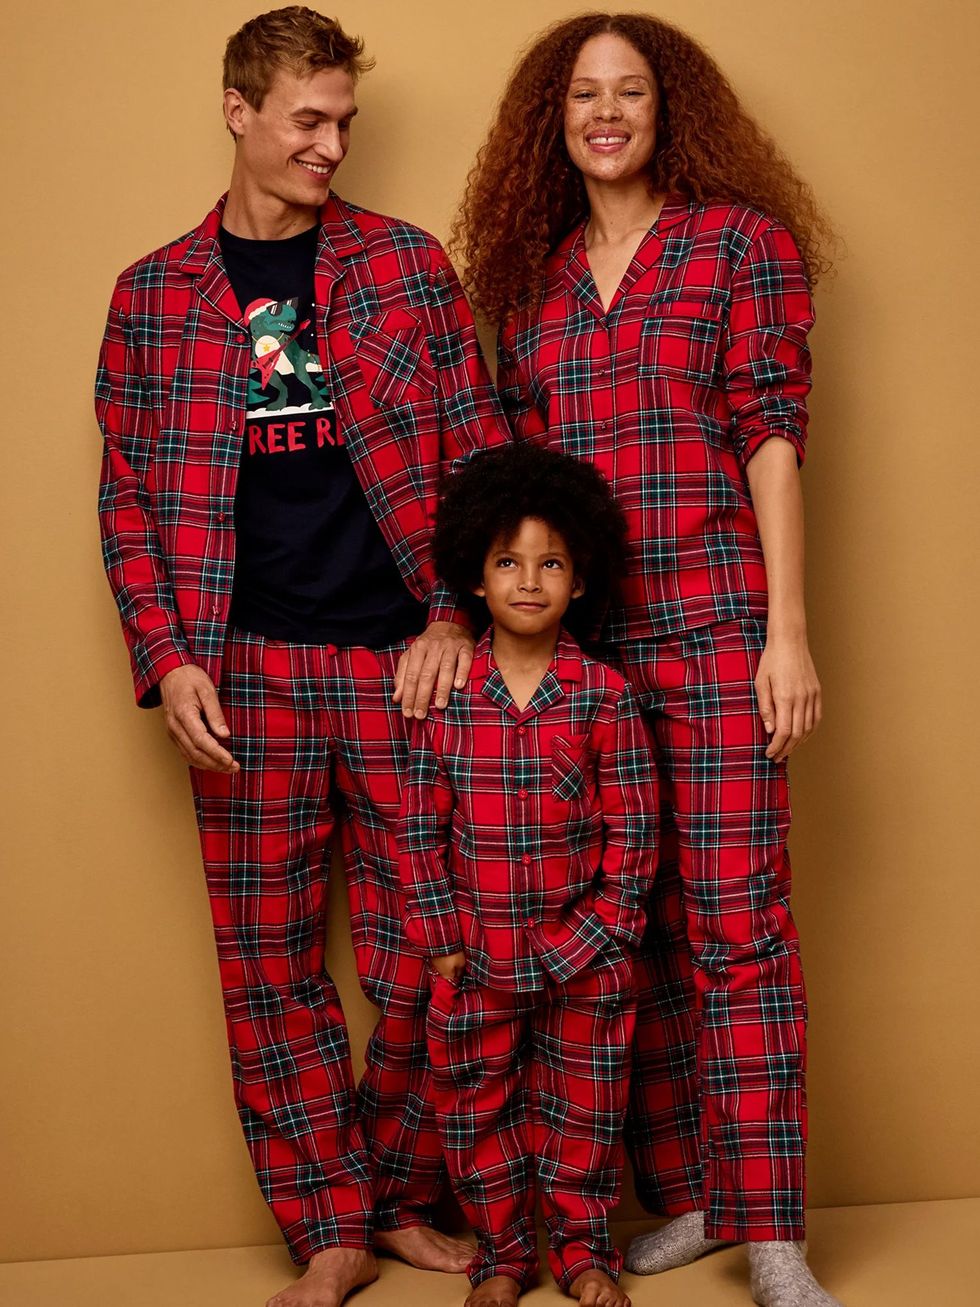 16 Best Matching Family Christmas Pajamas